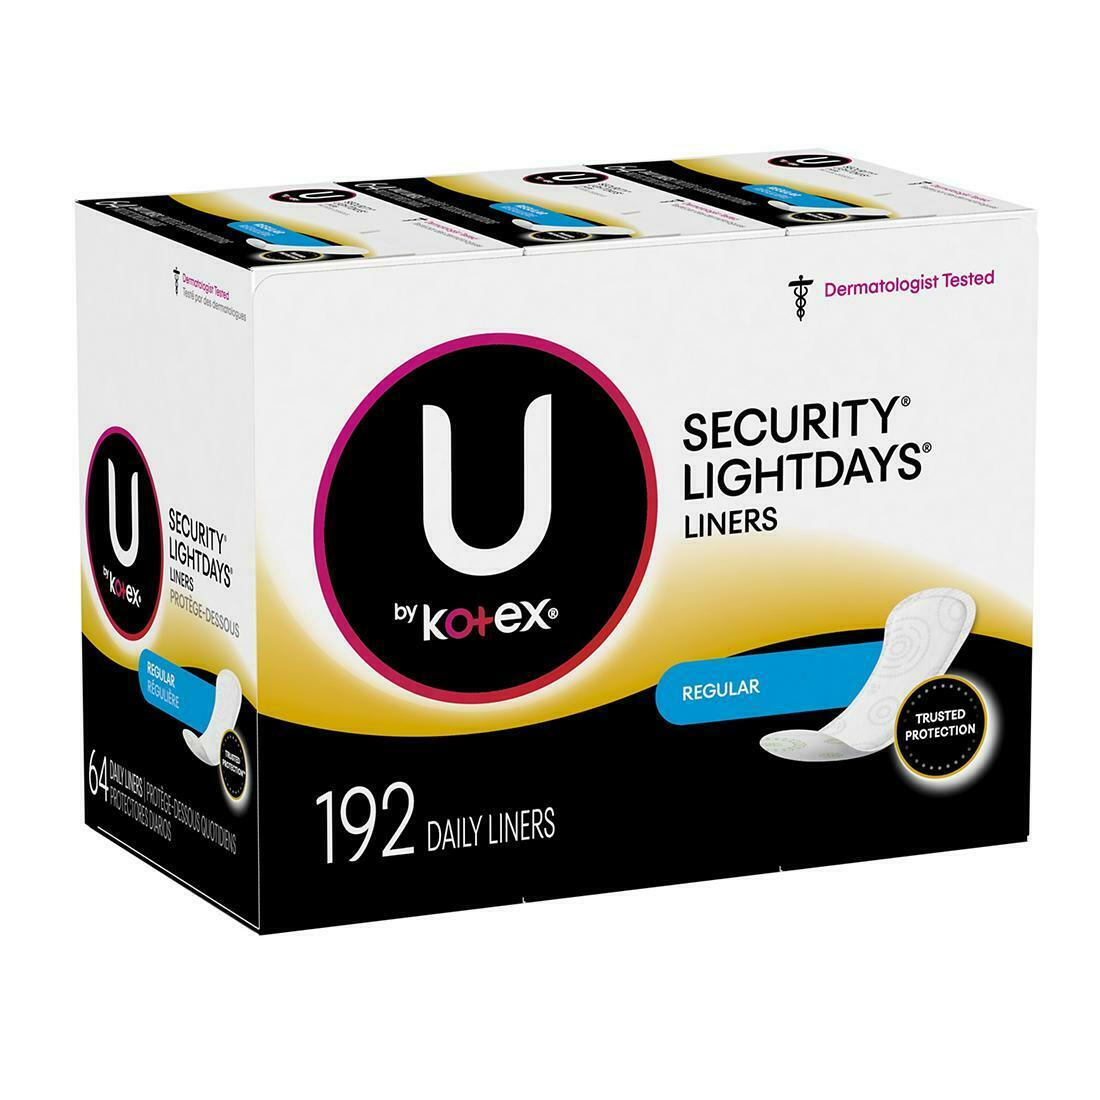 U By Kotex Security Lightdays Liners Regular, Tampons Backup 64 Or 128 Or 192 Ct